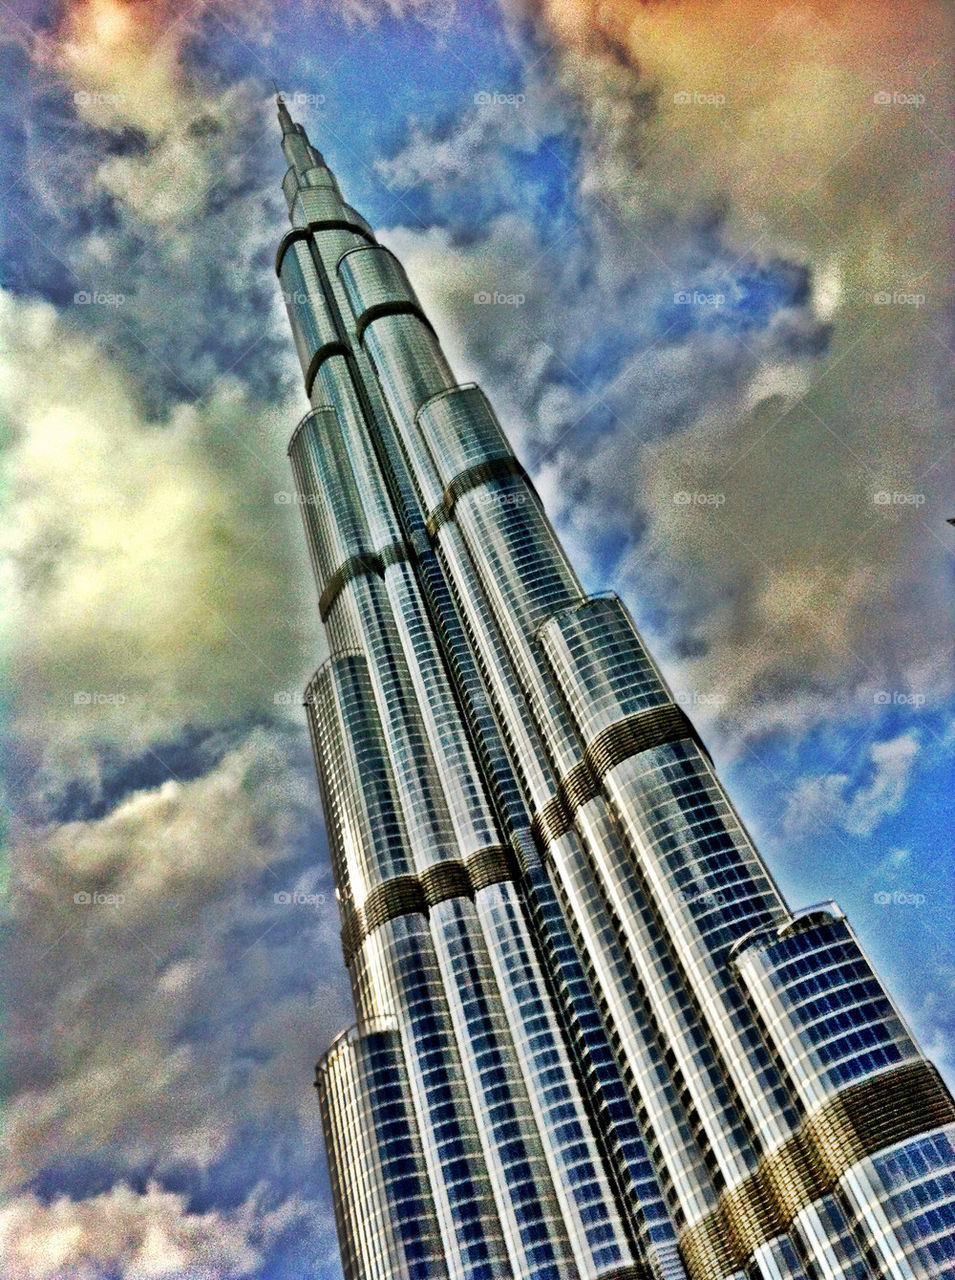 BURJ KHALIFA - TALLEST BUILDING IN THE WORLD